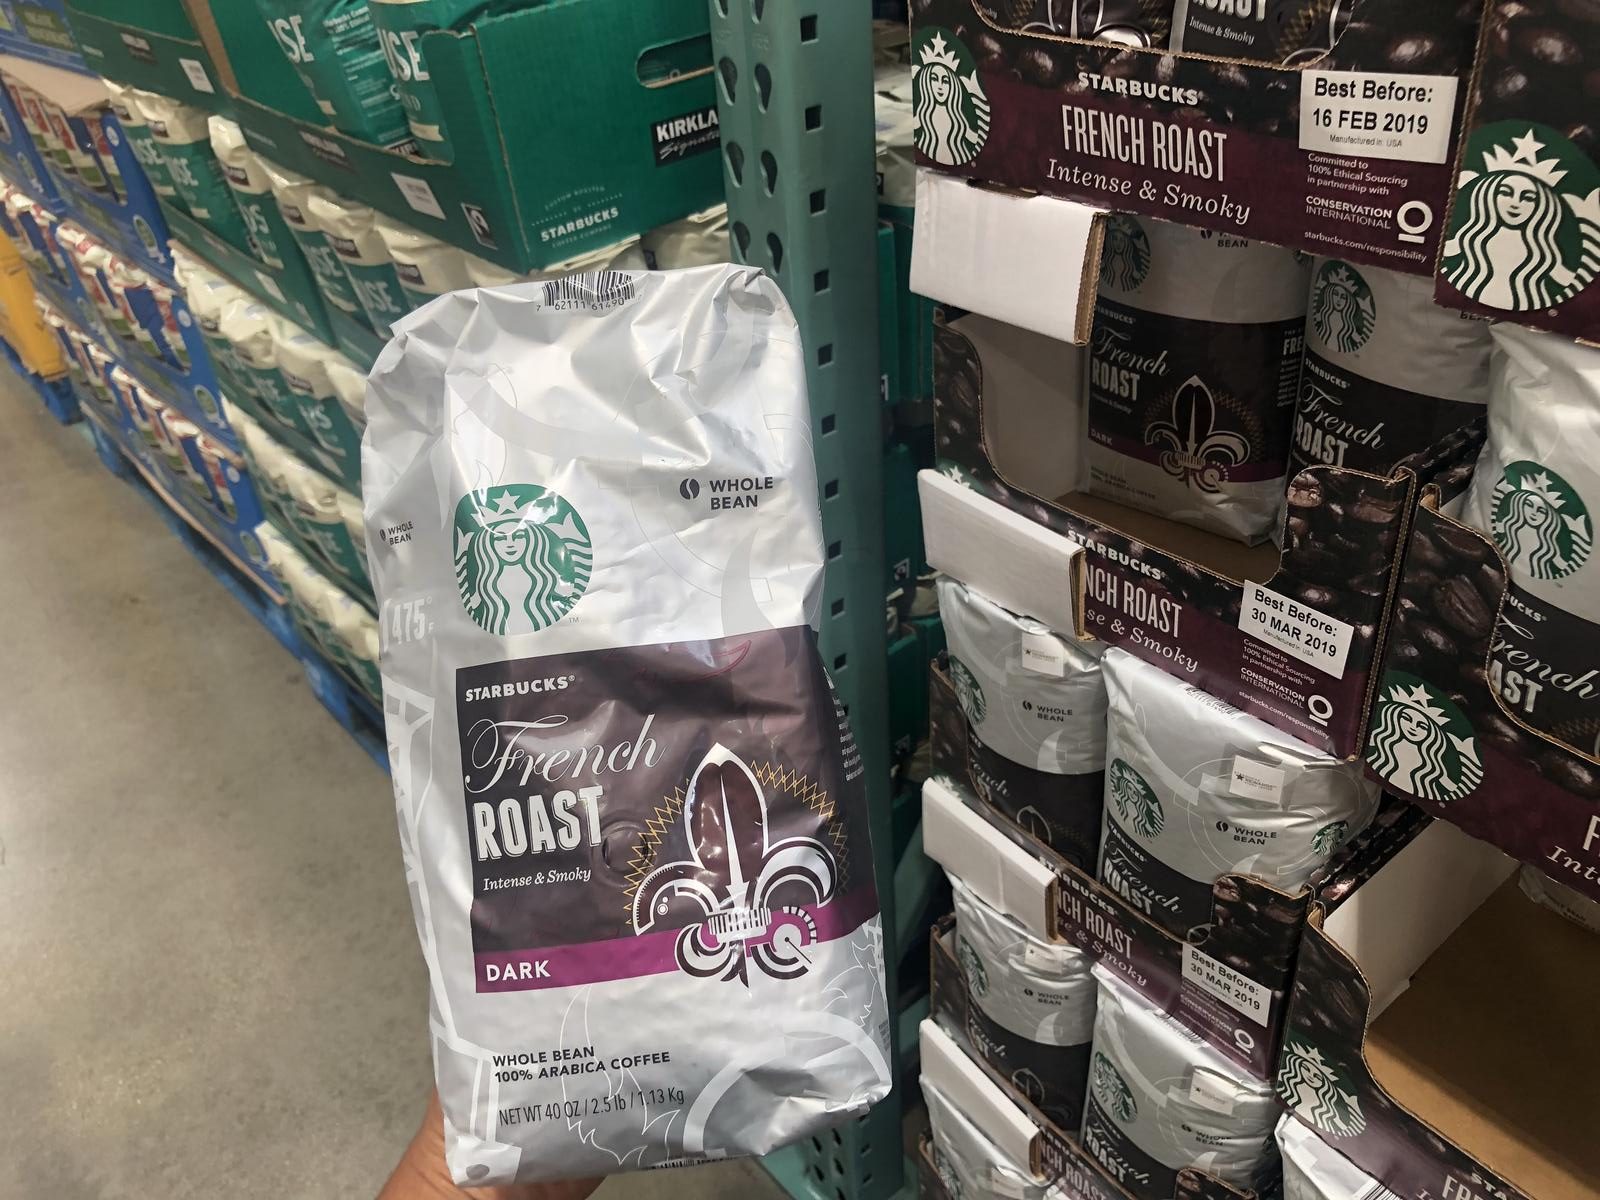 keto costco deals September 2018 – Starbucks French Roast coffee at Costco Hip2Keto